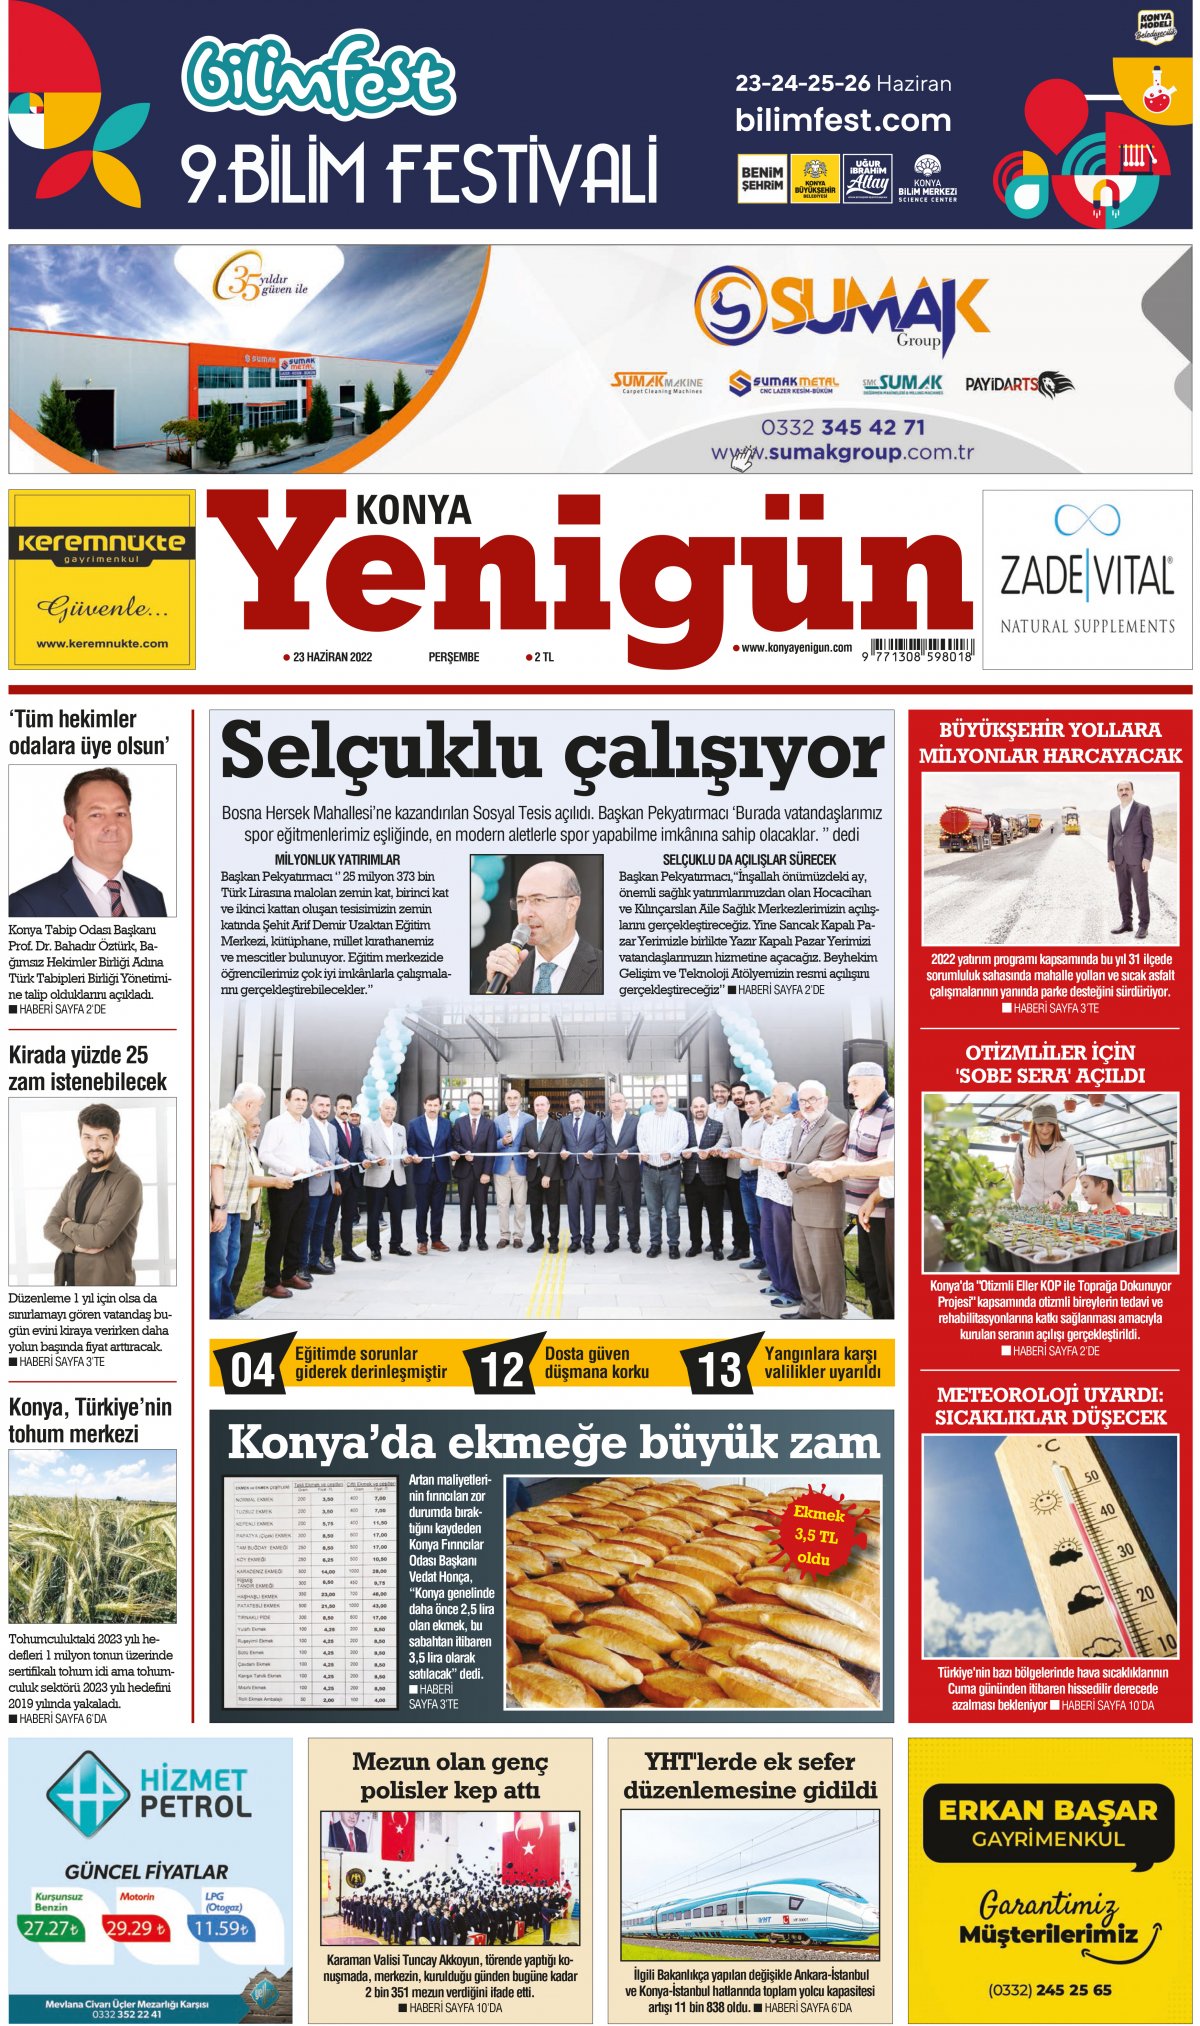 Konya Yenigün Gazetesi - 23.06.2022 Manşeti